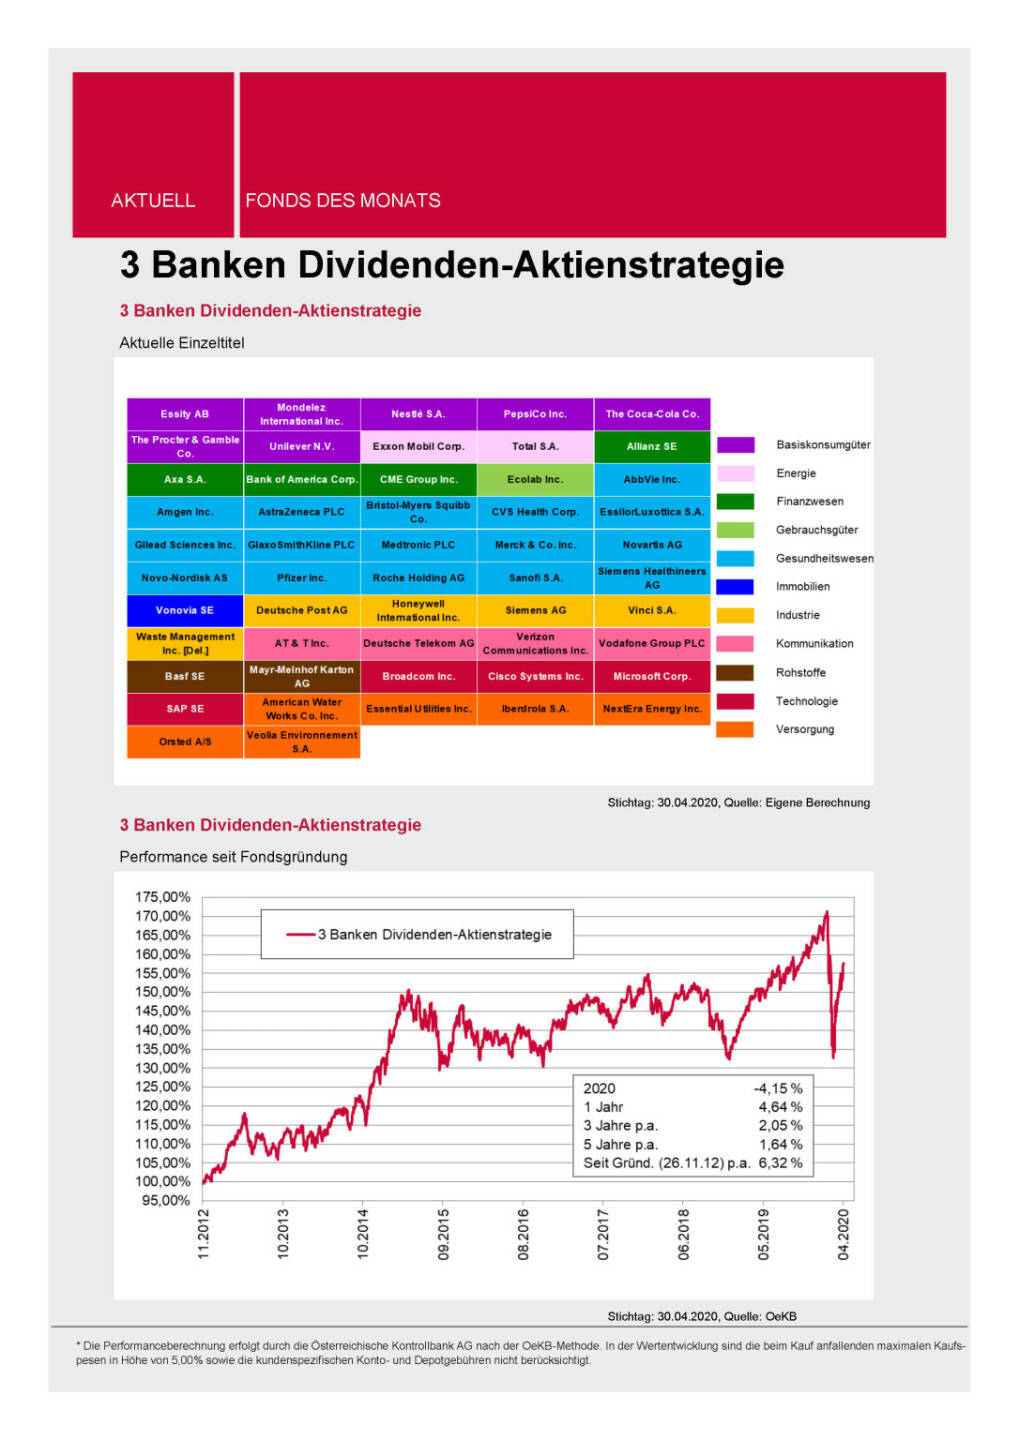 3 Banken-Generali Fonds Journal 05/2020 - Dividenden-Aktienstrategie